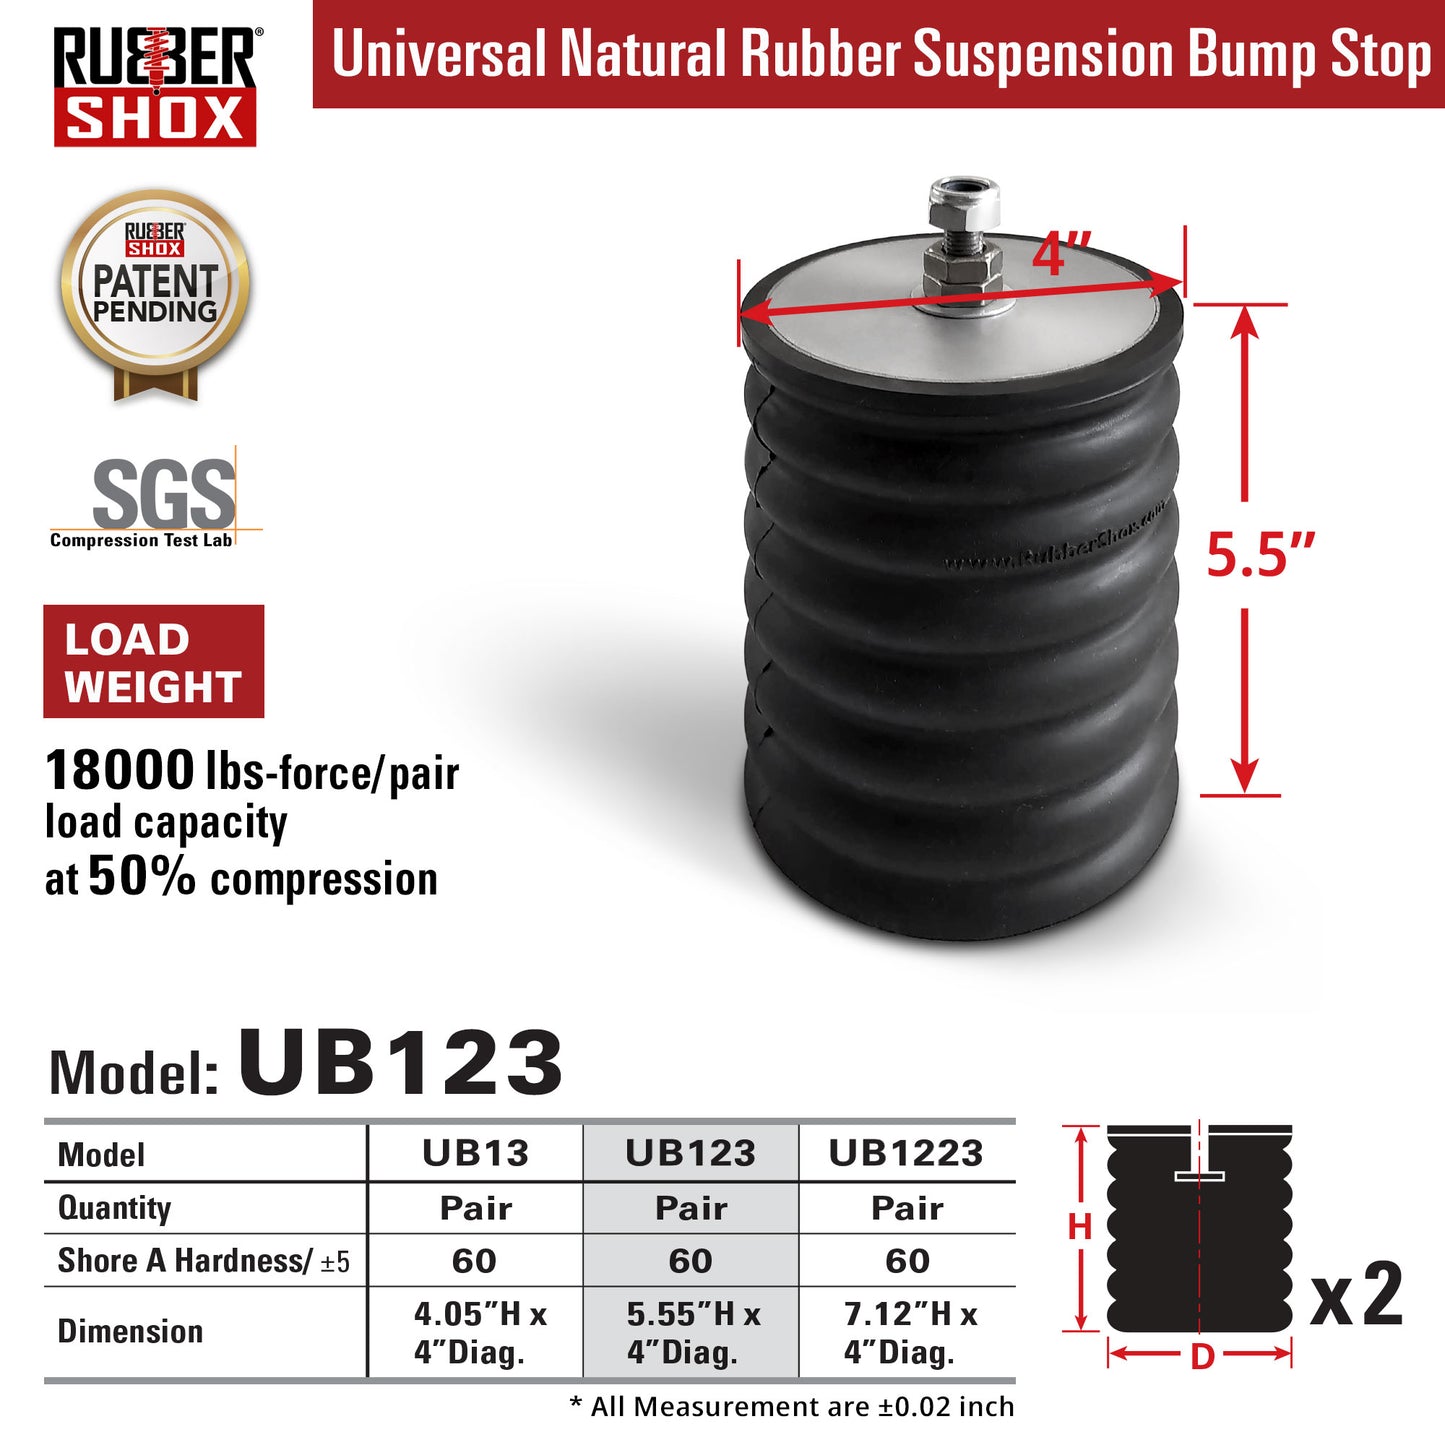 Universal Natural Rubber Suspension Bump Stop